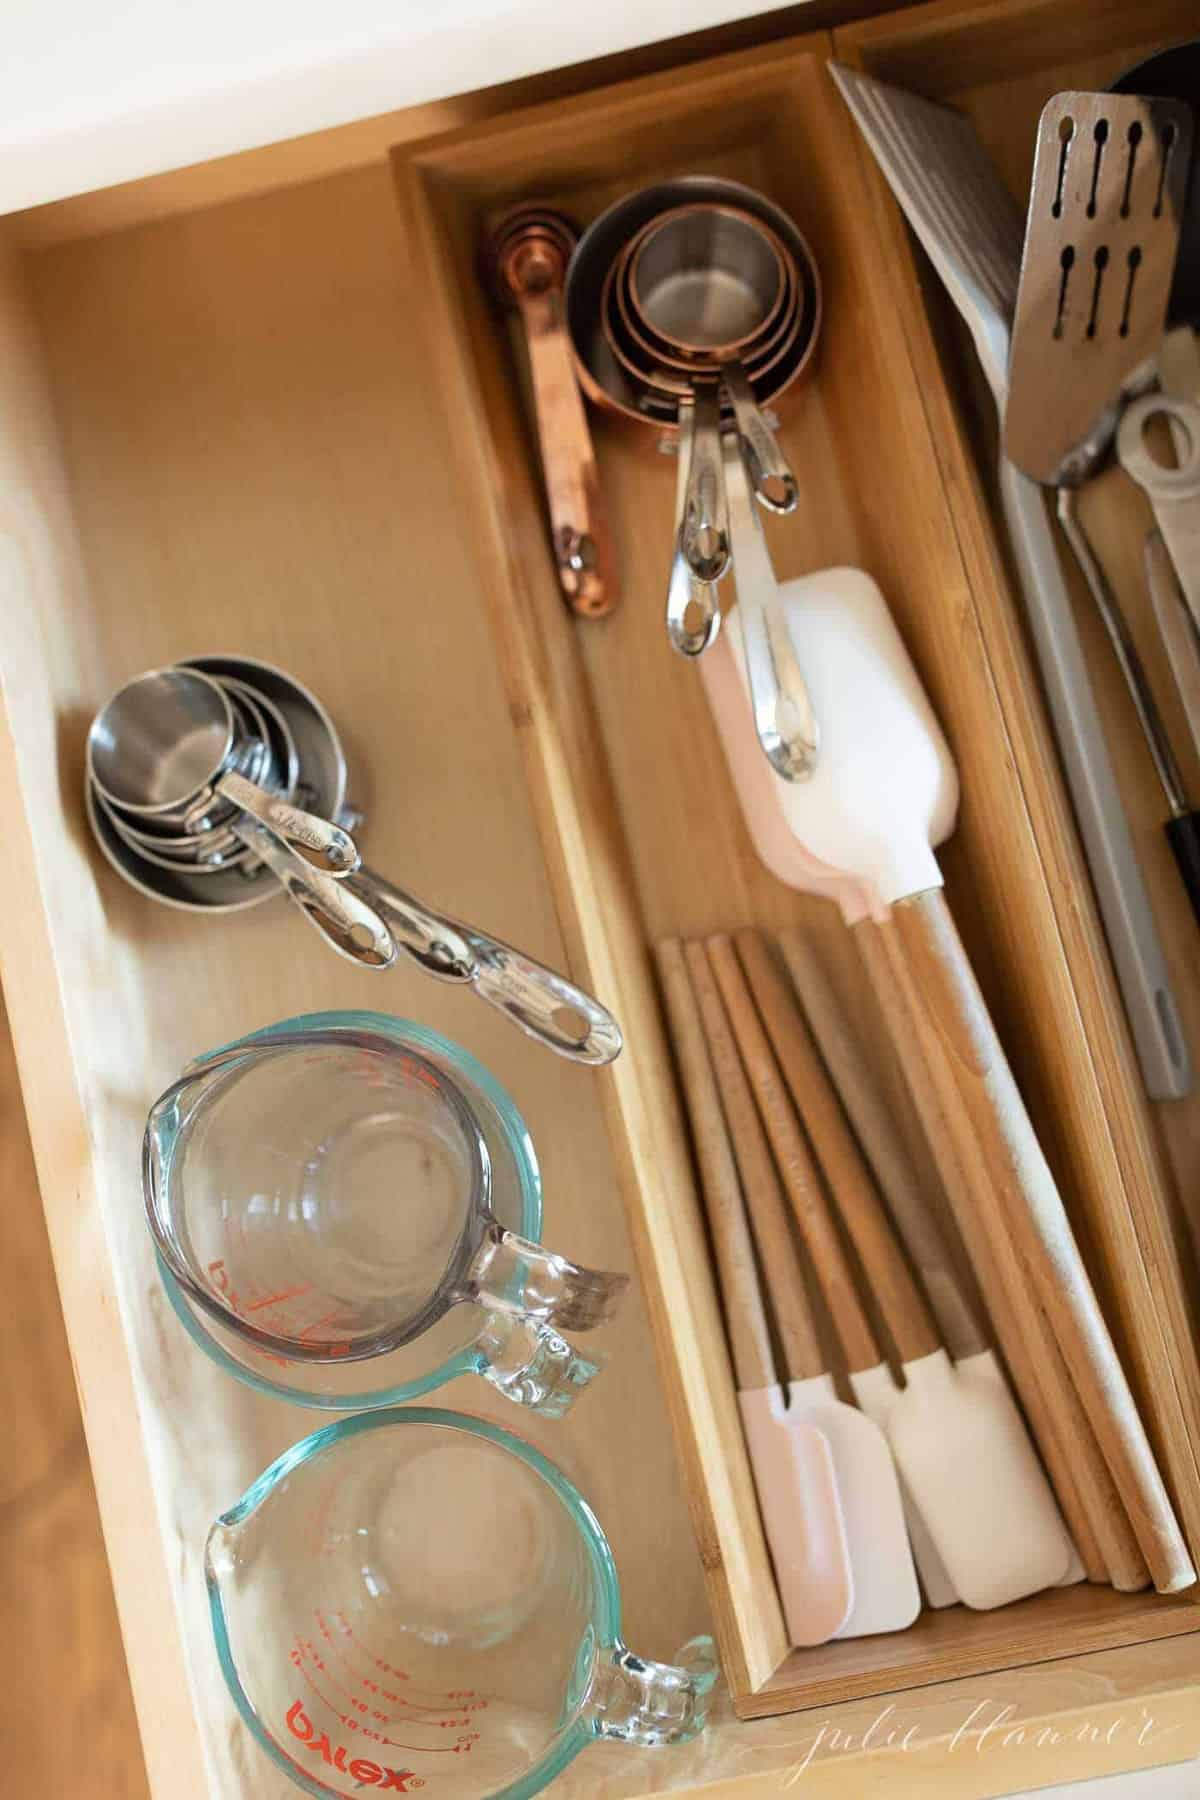 Drawer dividers in a kitchen drawer organization photo.